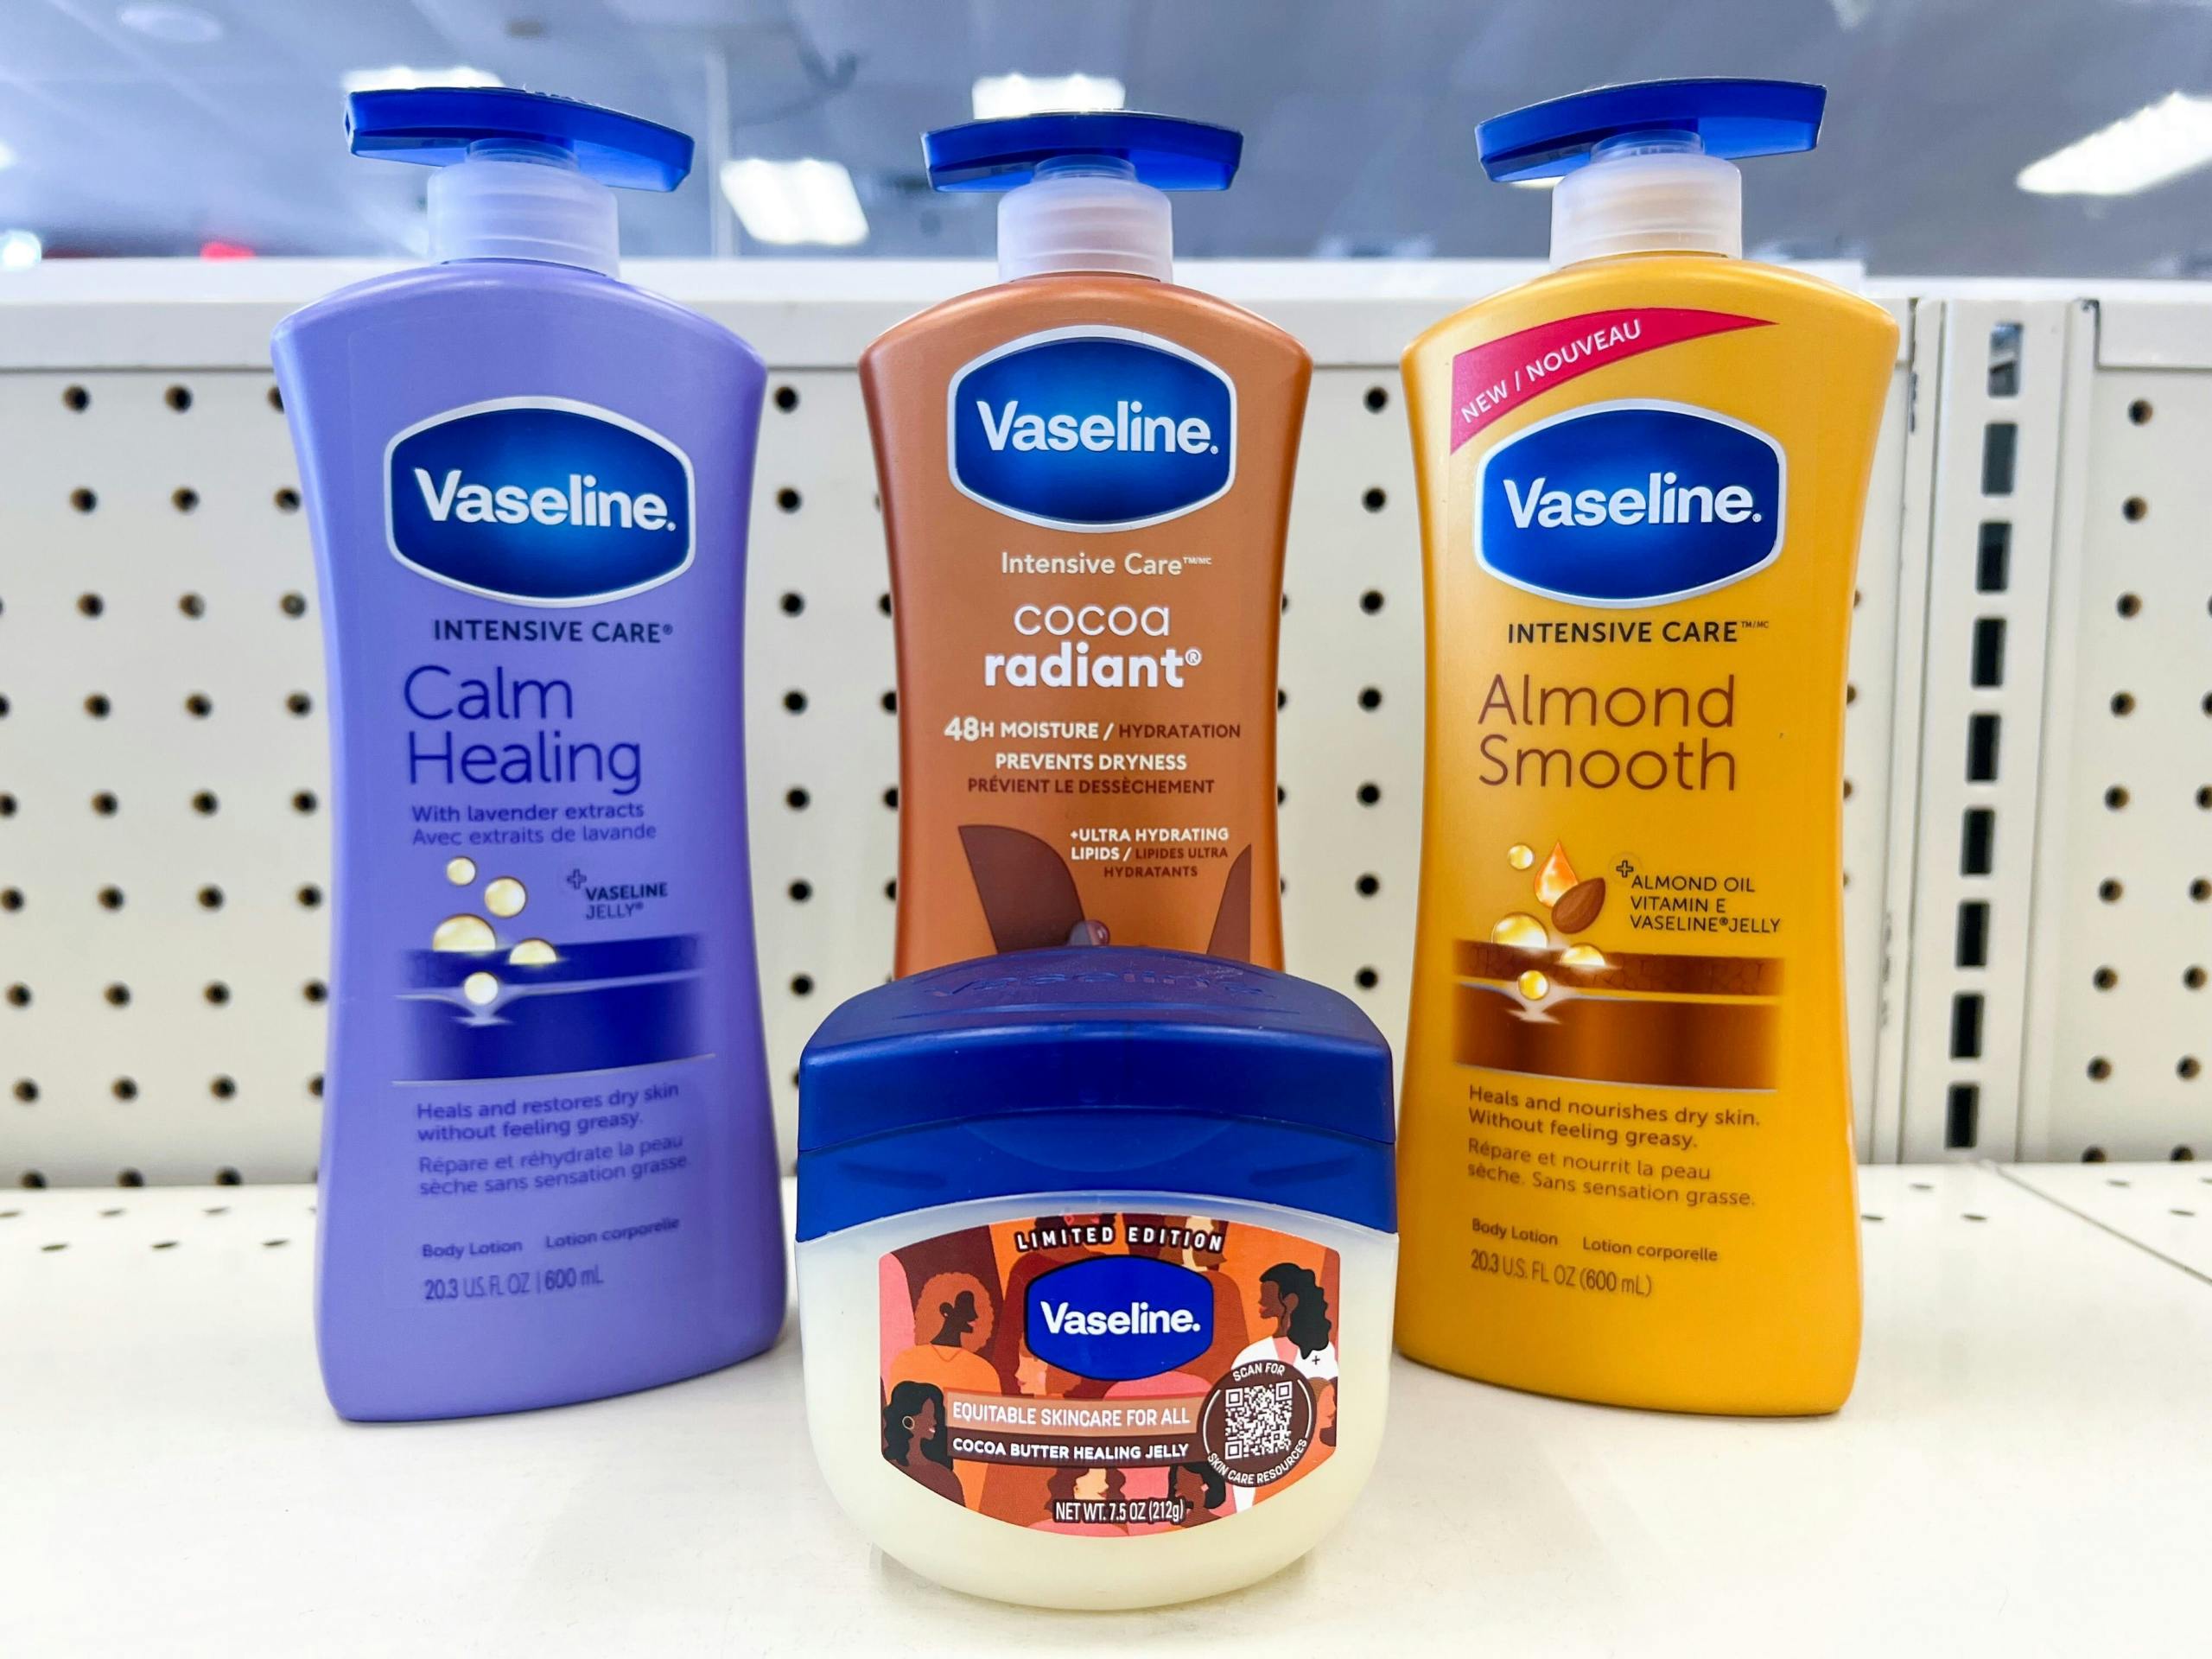 bottle of Vaseline next to three bottles of Vaseline lotions on shelf